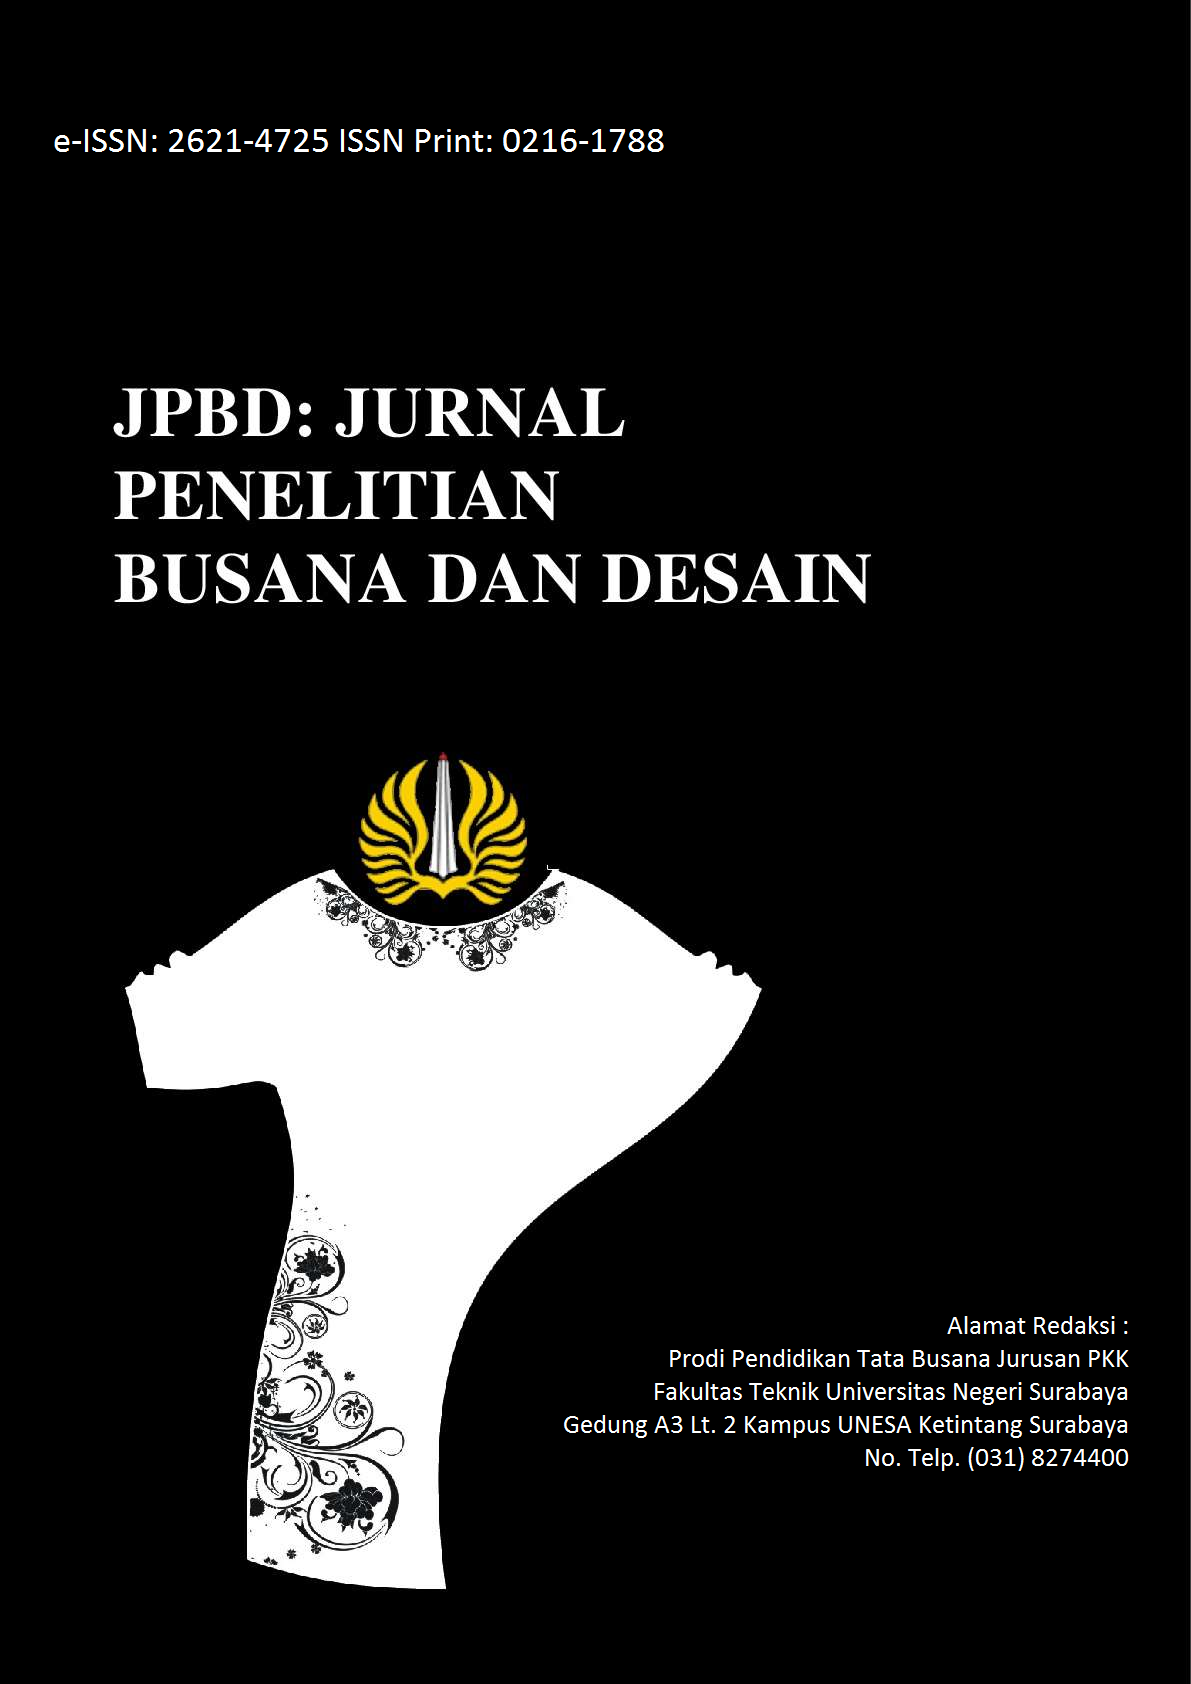 JPBD (Jurnal Penelitian Busana dan Desain)